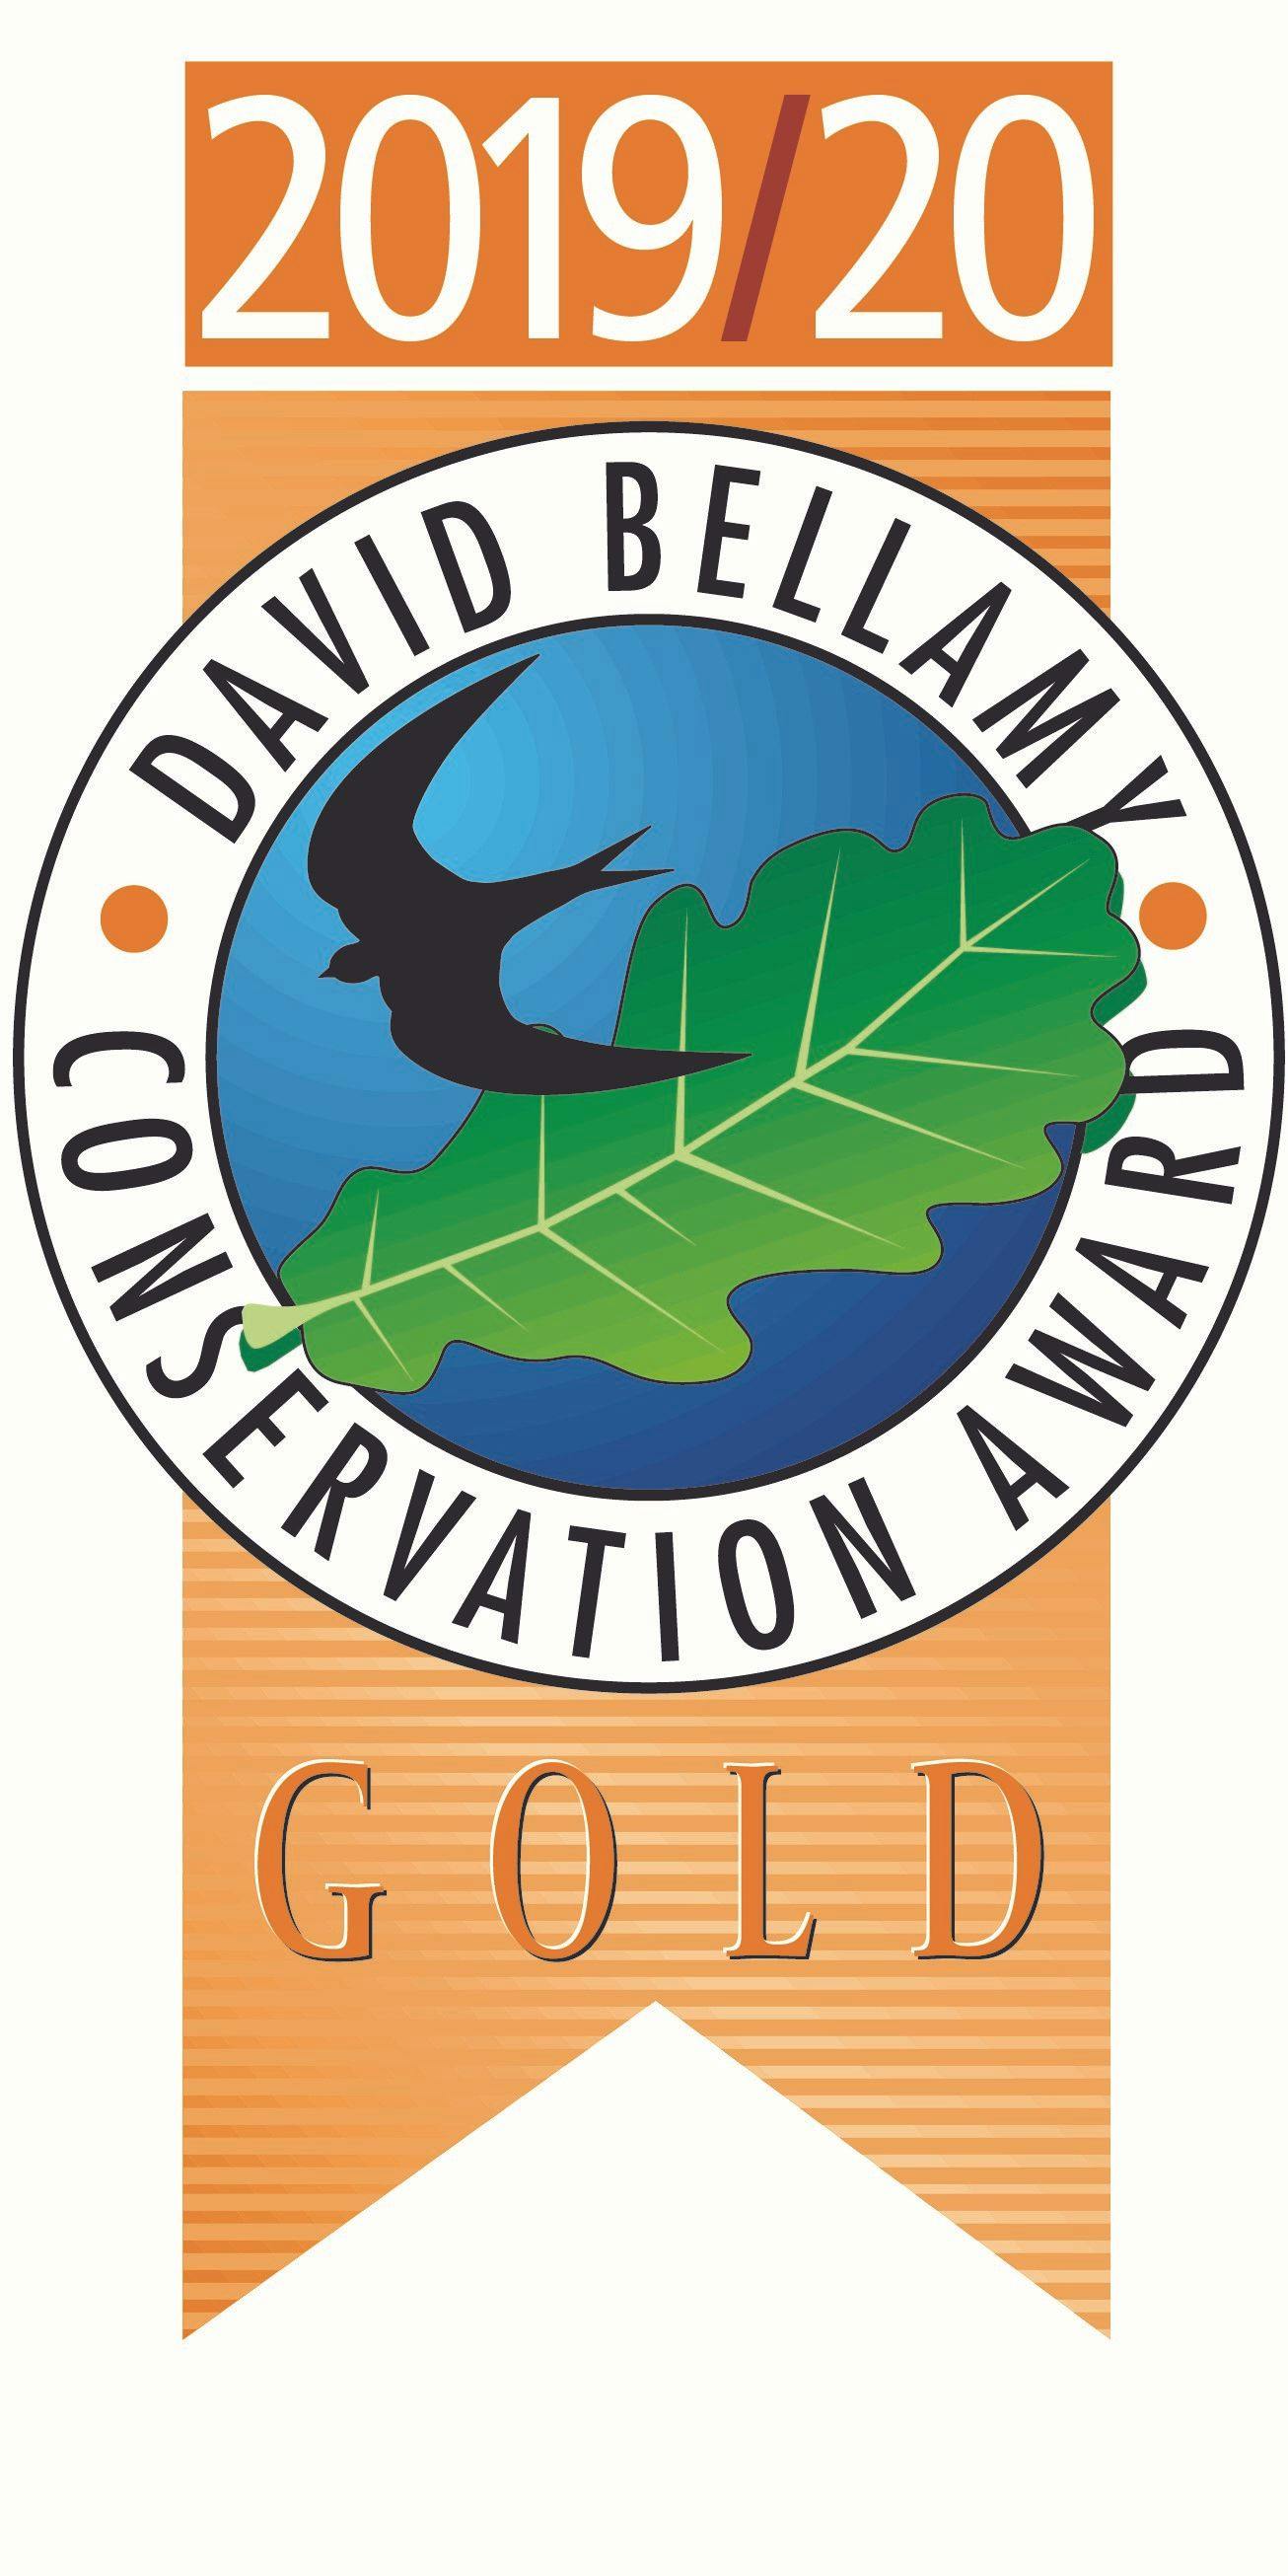 David Bellamy conservation awards - Gold 2019-20